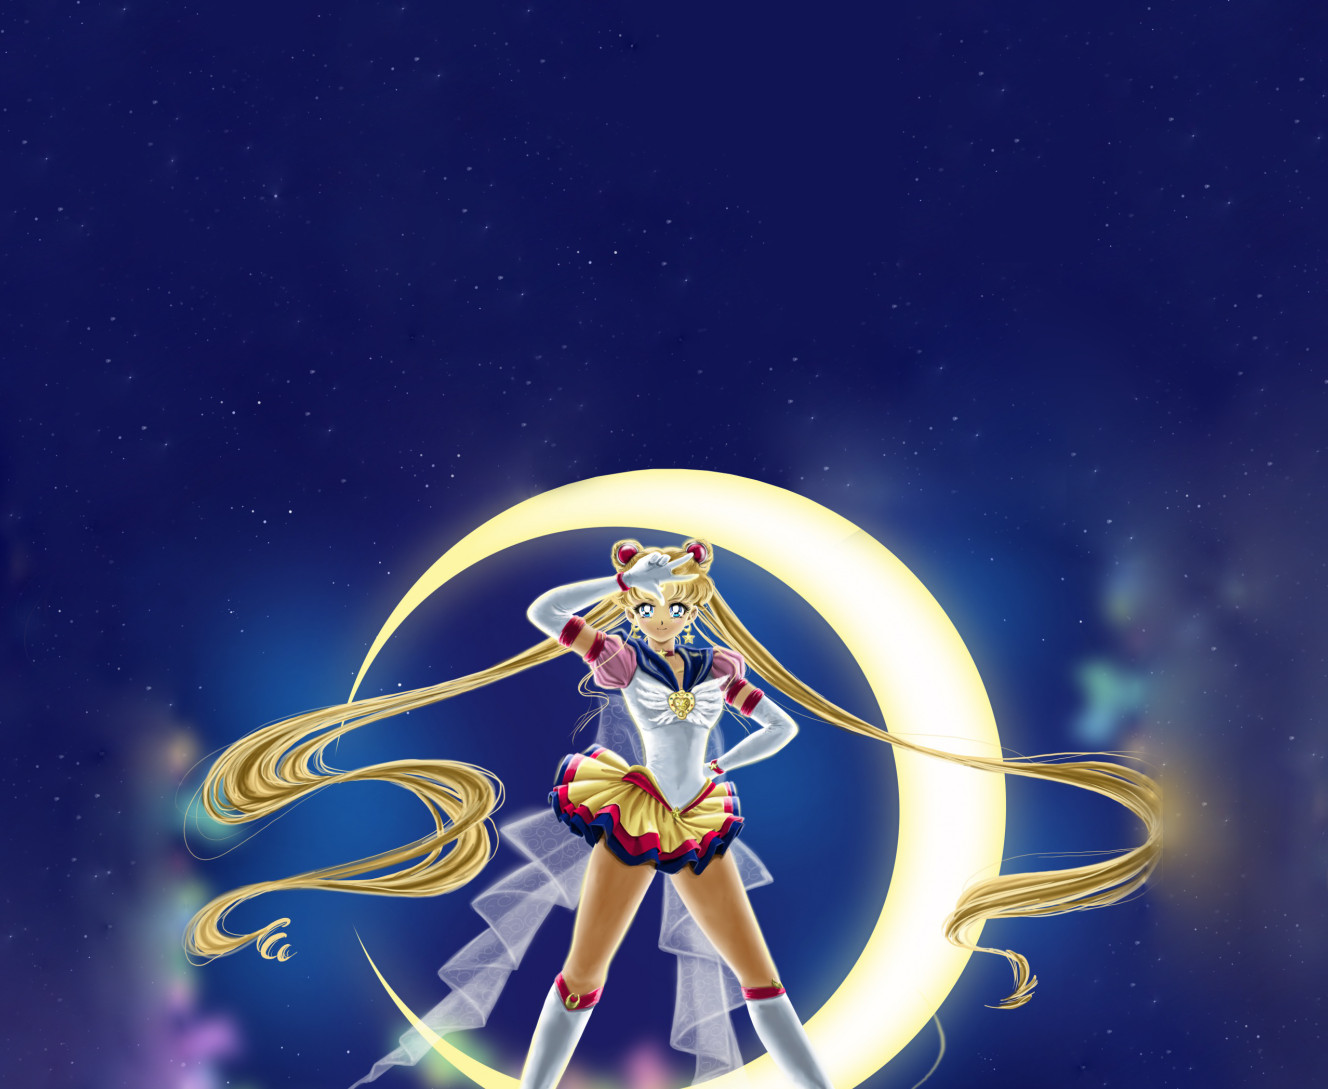 sailor moon